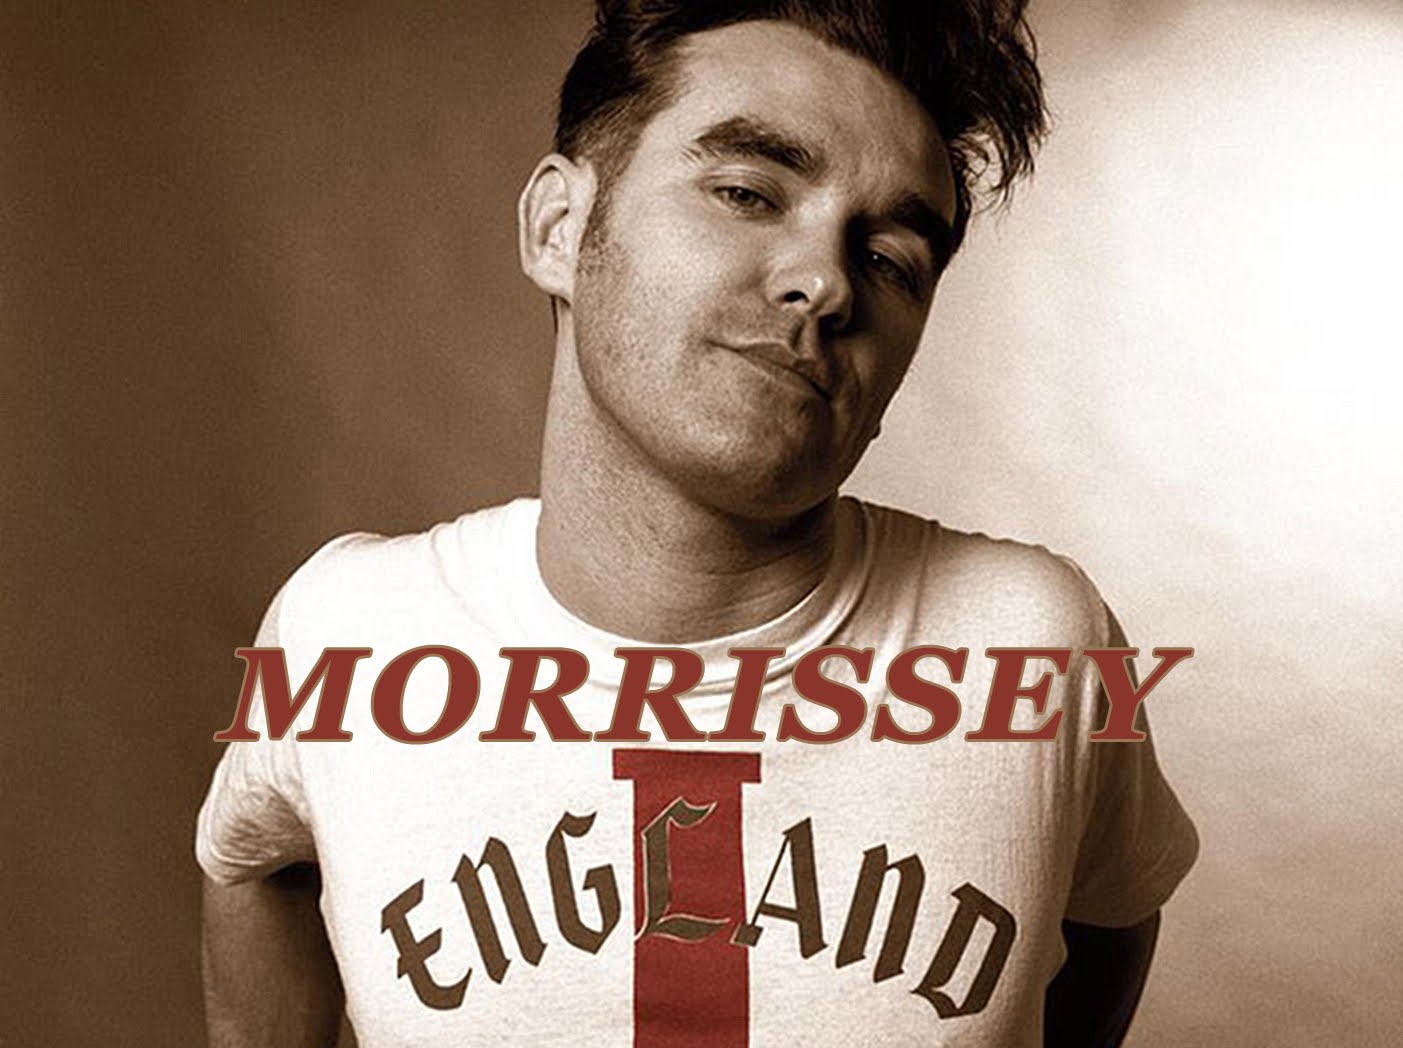 News – Morrissey annule sa tournée en Europe